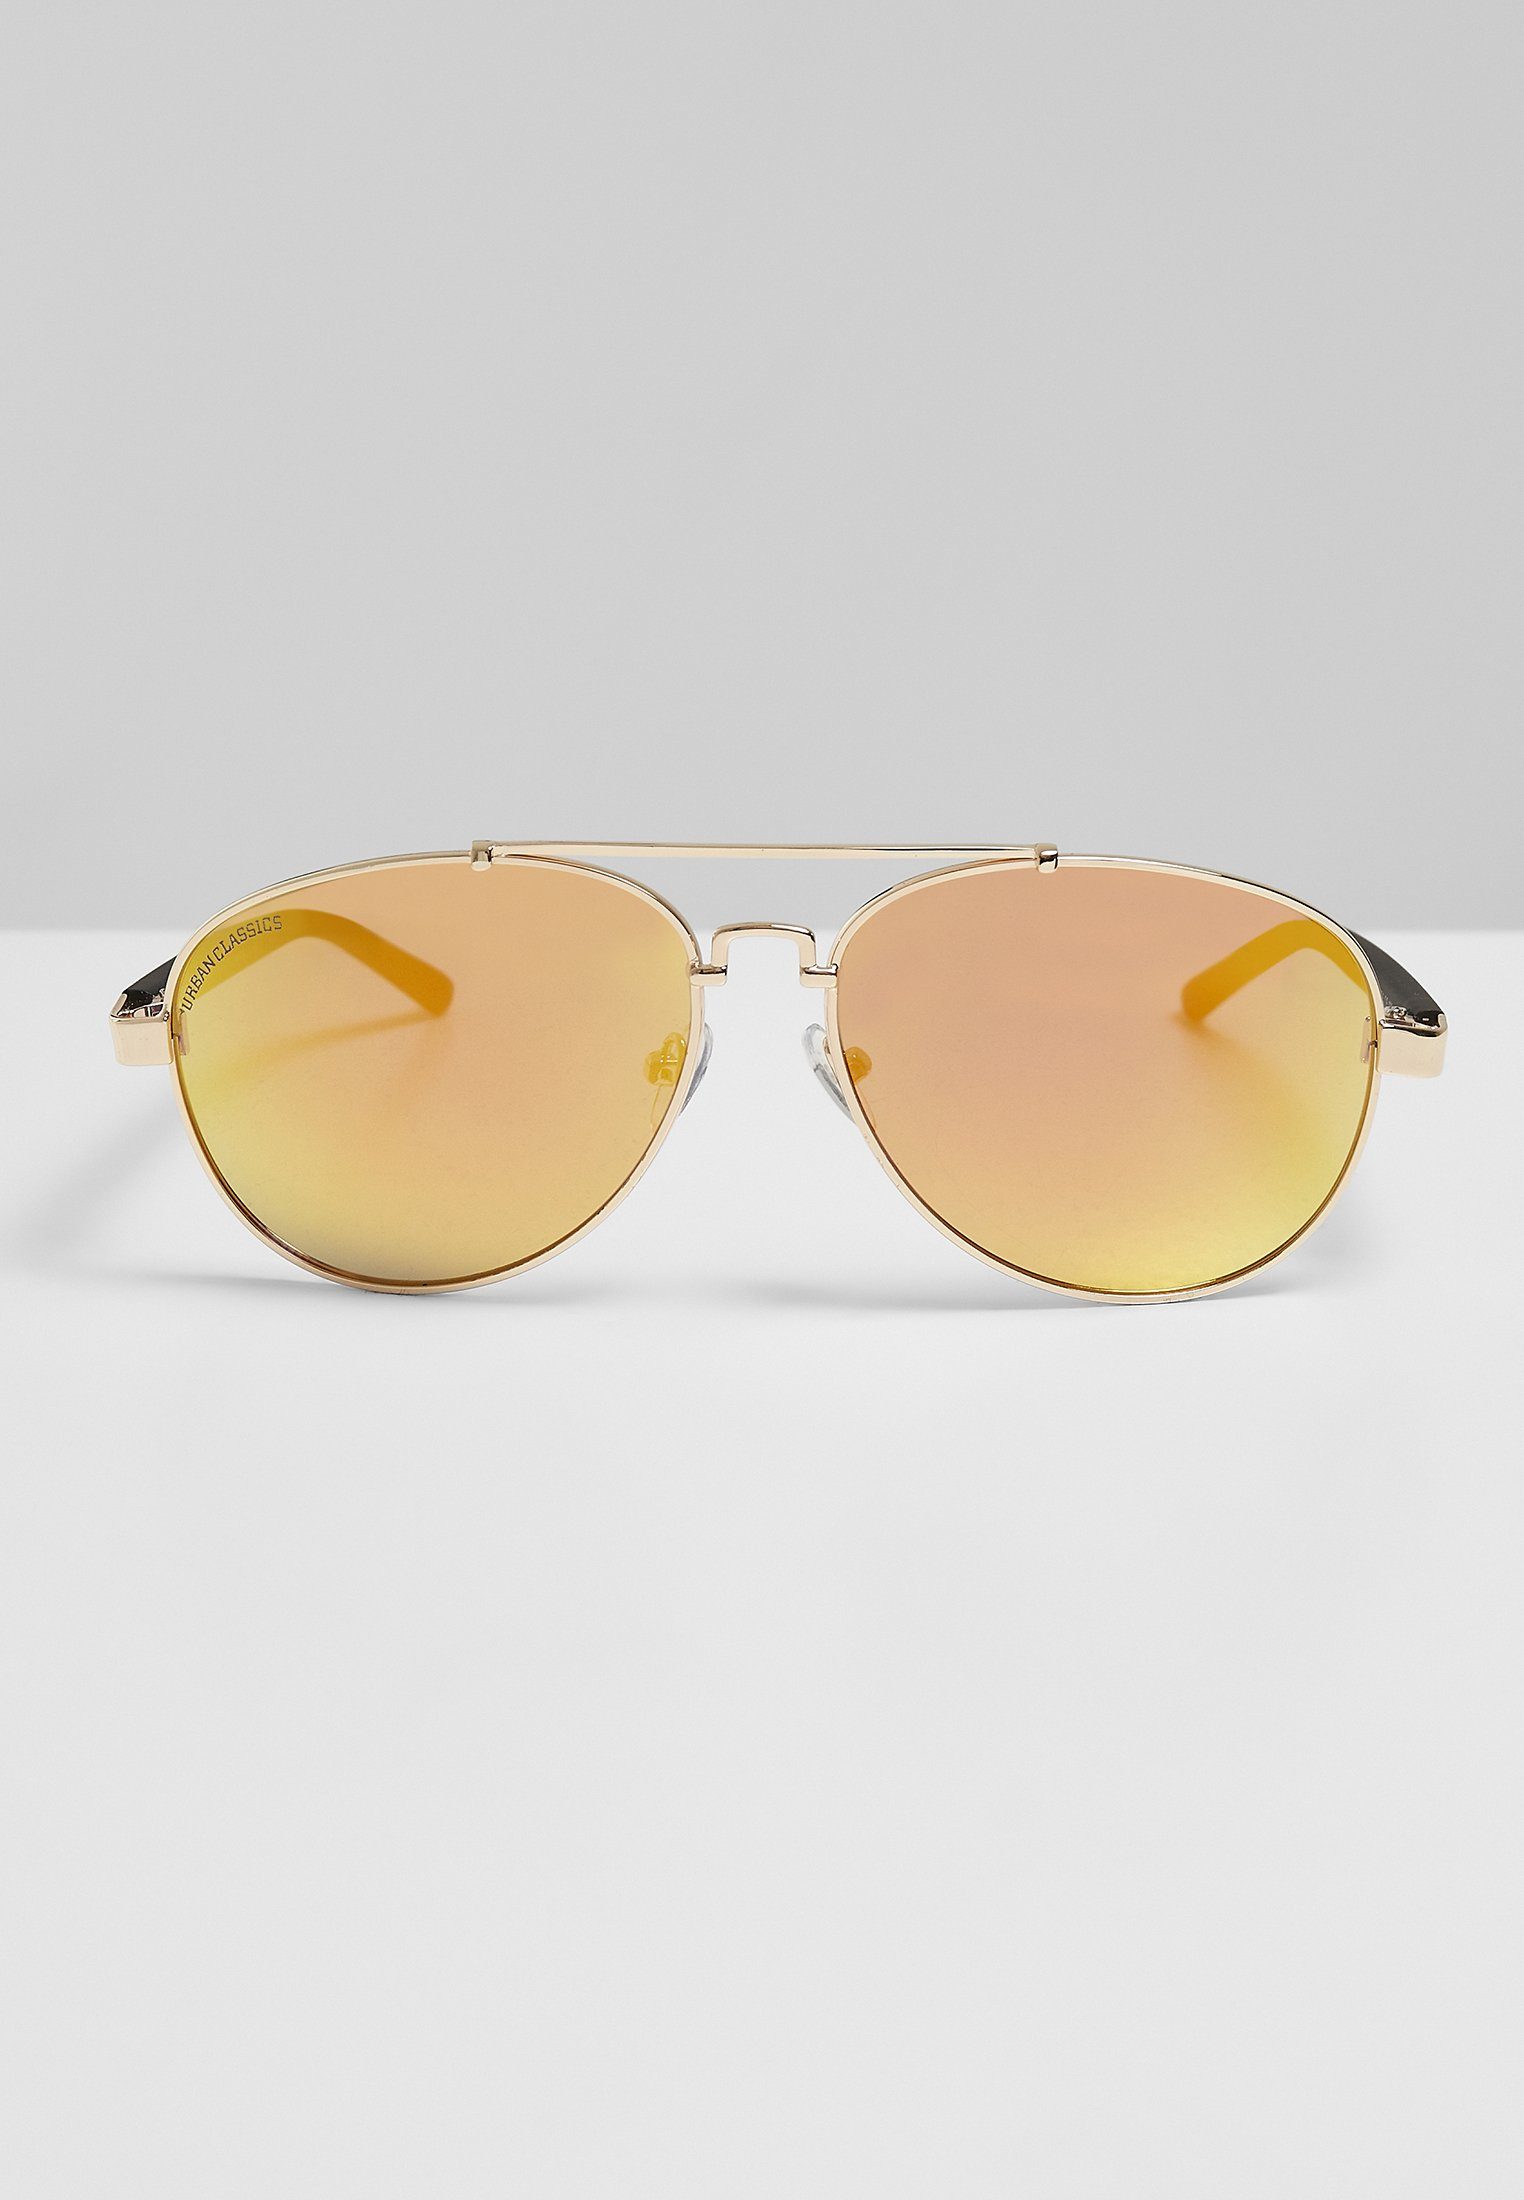 Mirror Mumbo gold/orange UC Sonnenbrille URBAN Accessoires CLASSICS Sunglasses